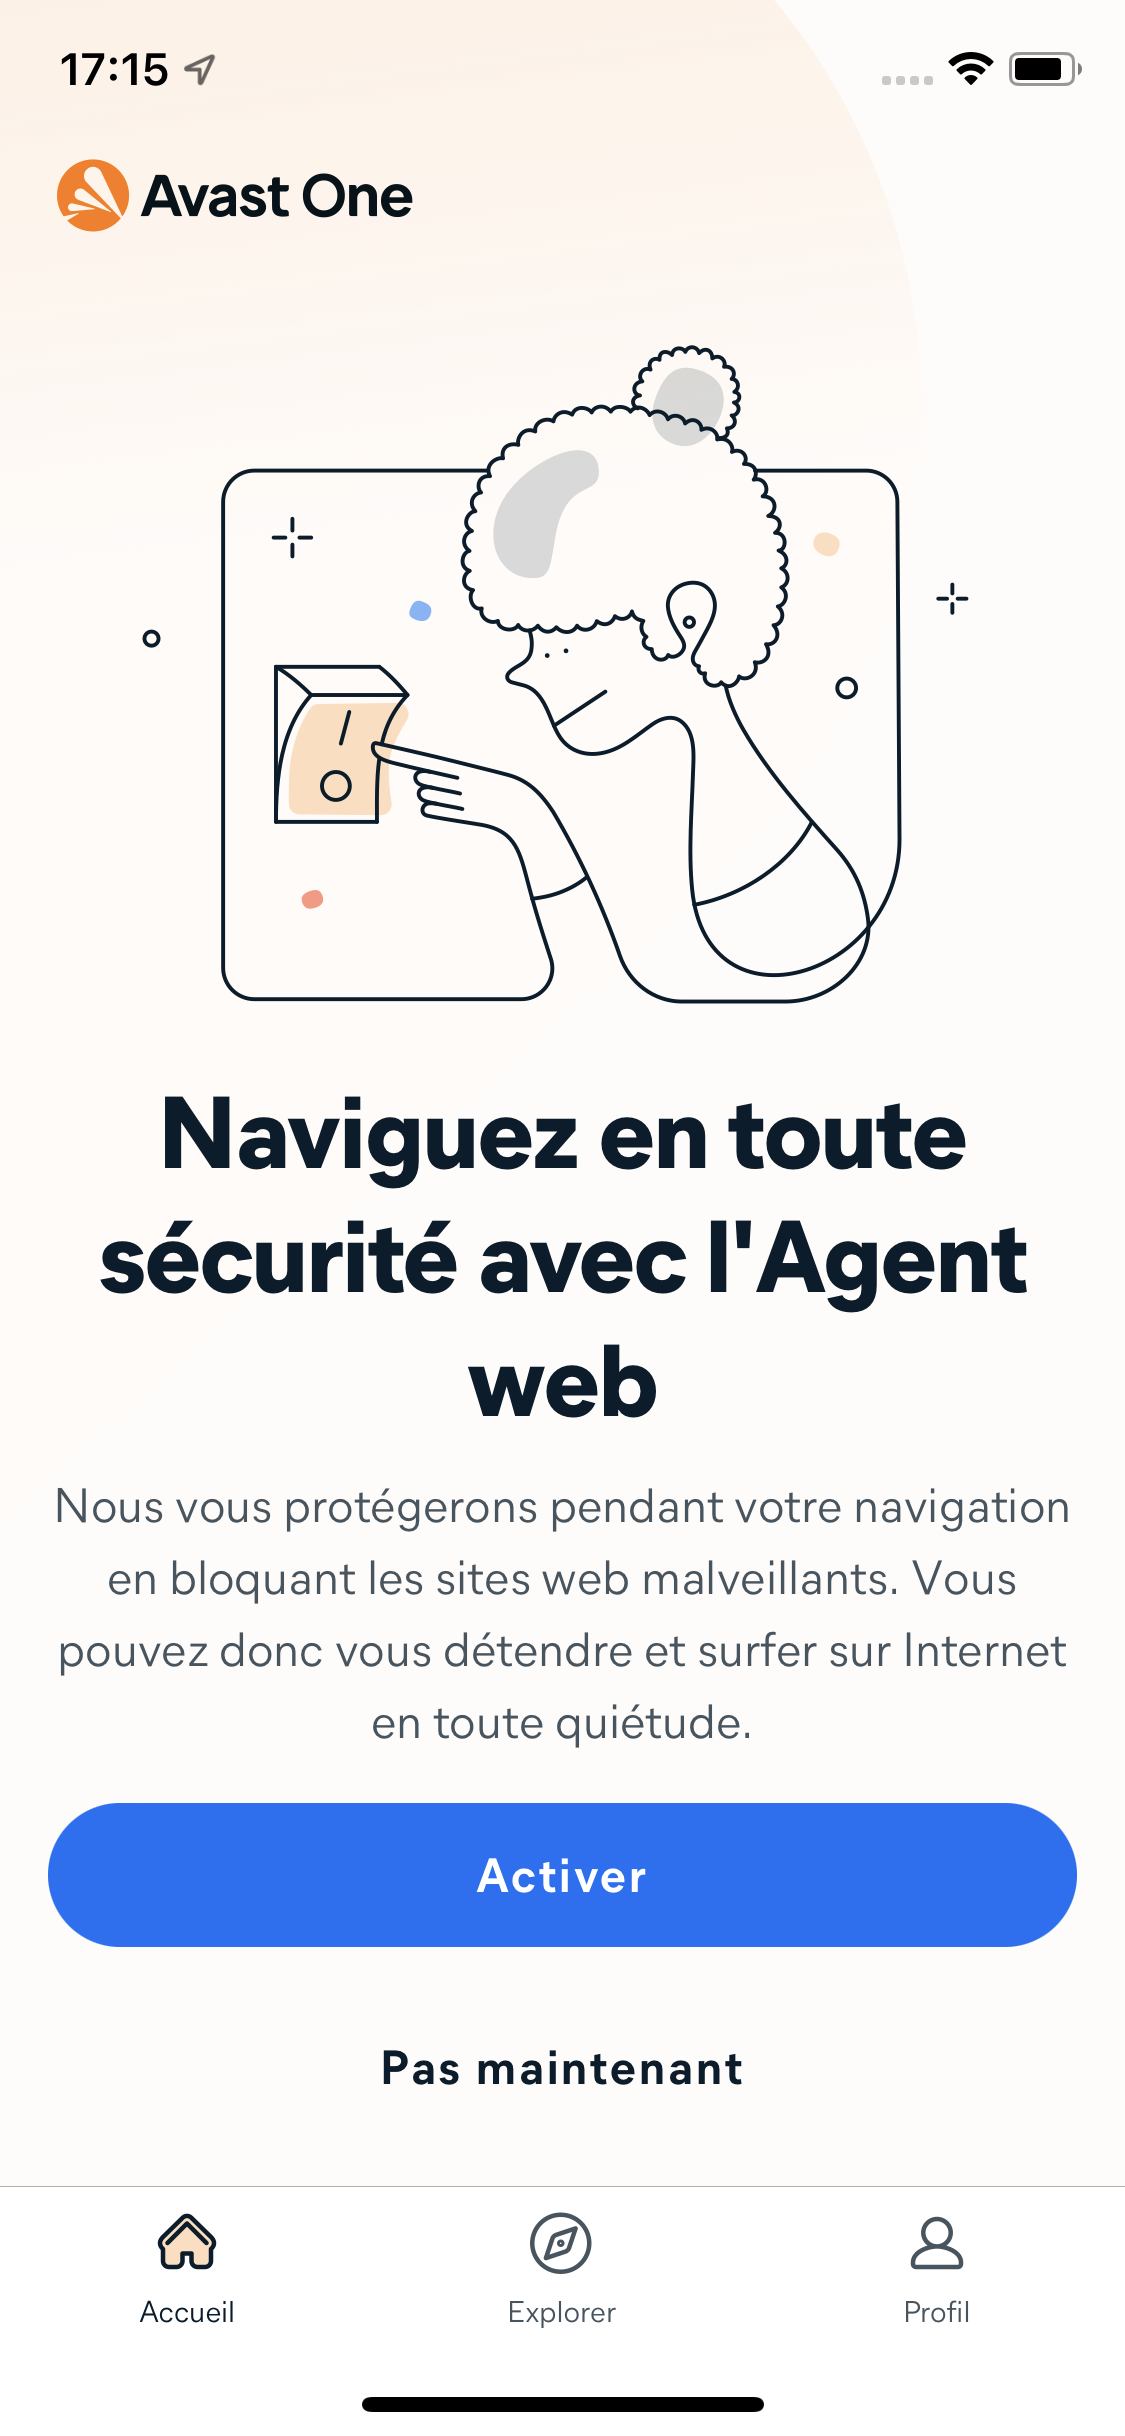 Avast One - Agent Web